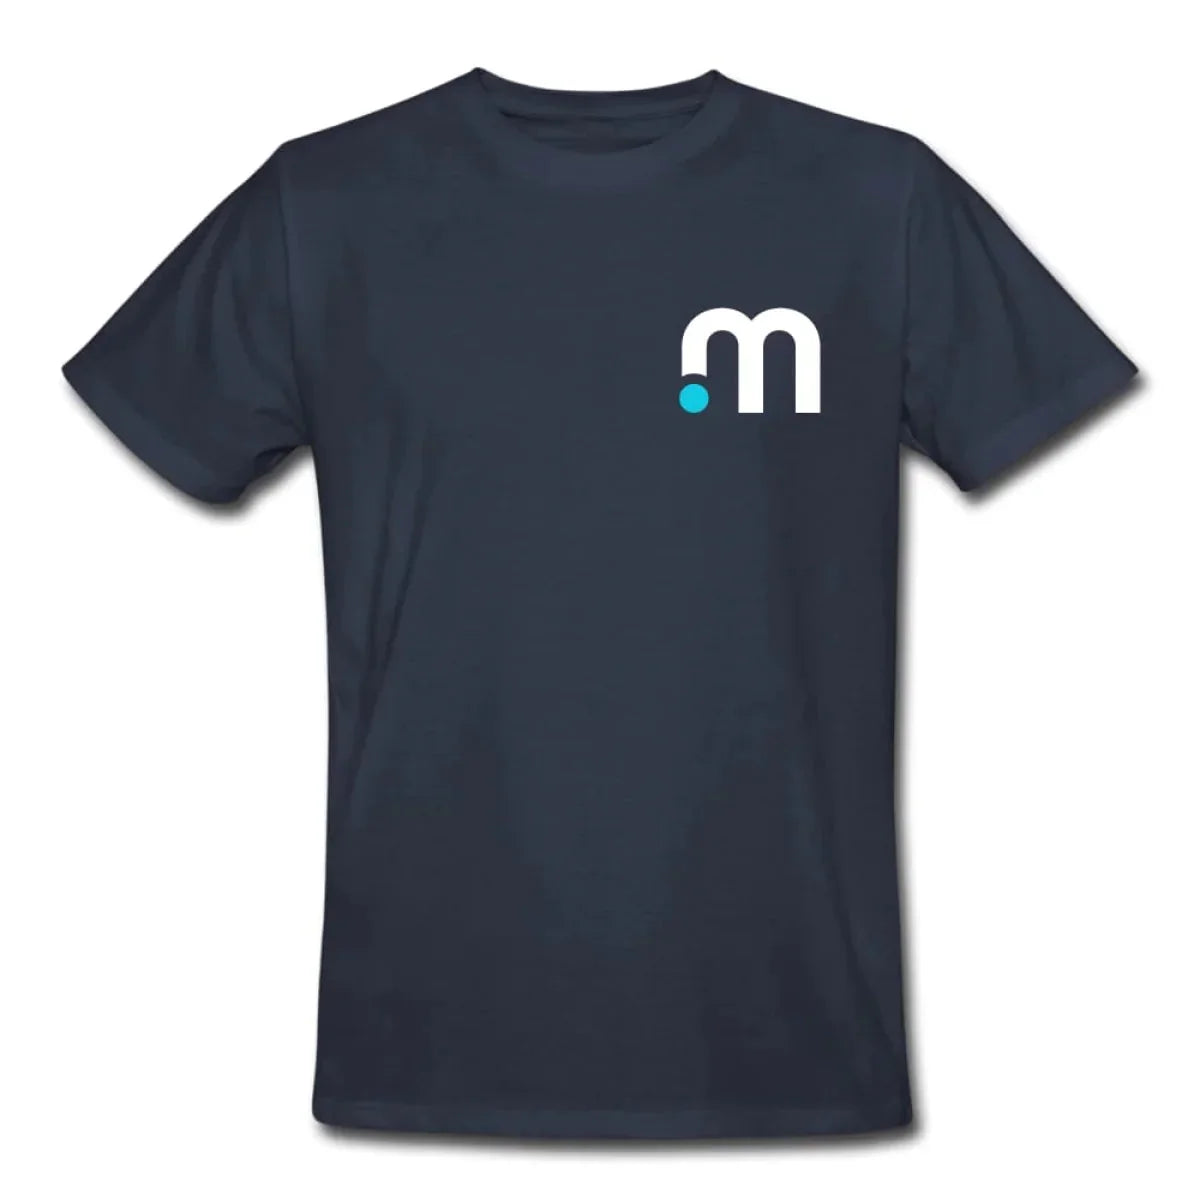 Masori-Masori - Männer Workwear T-Shirt-T-Shirt-Masori.de